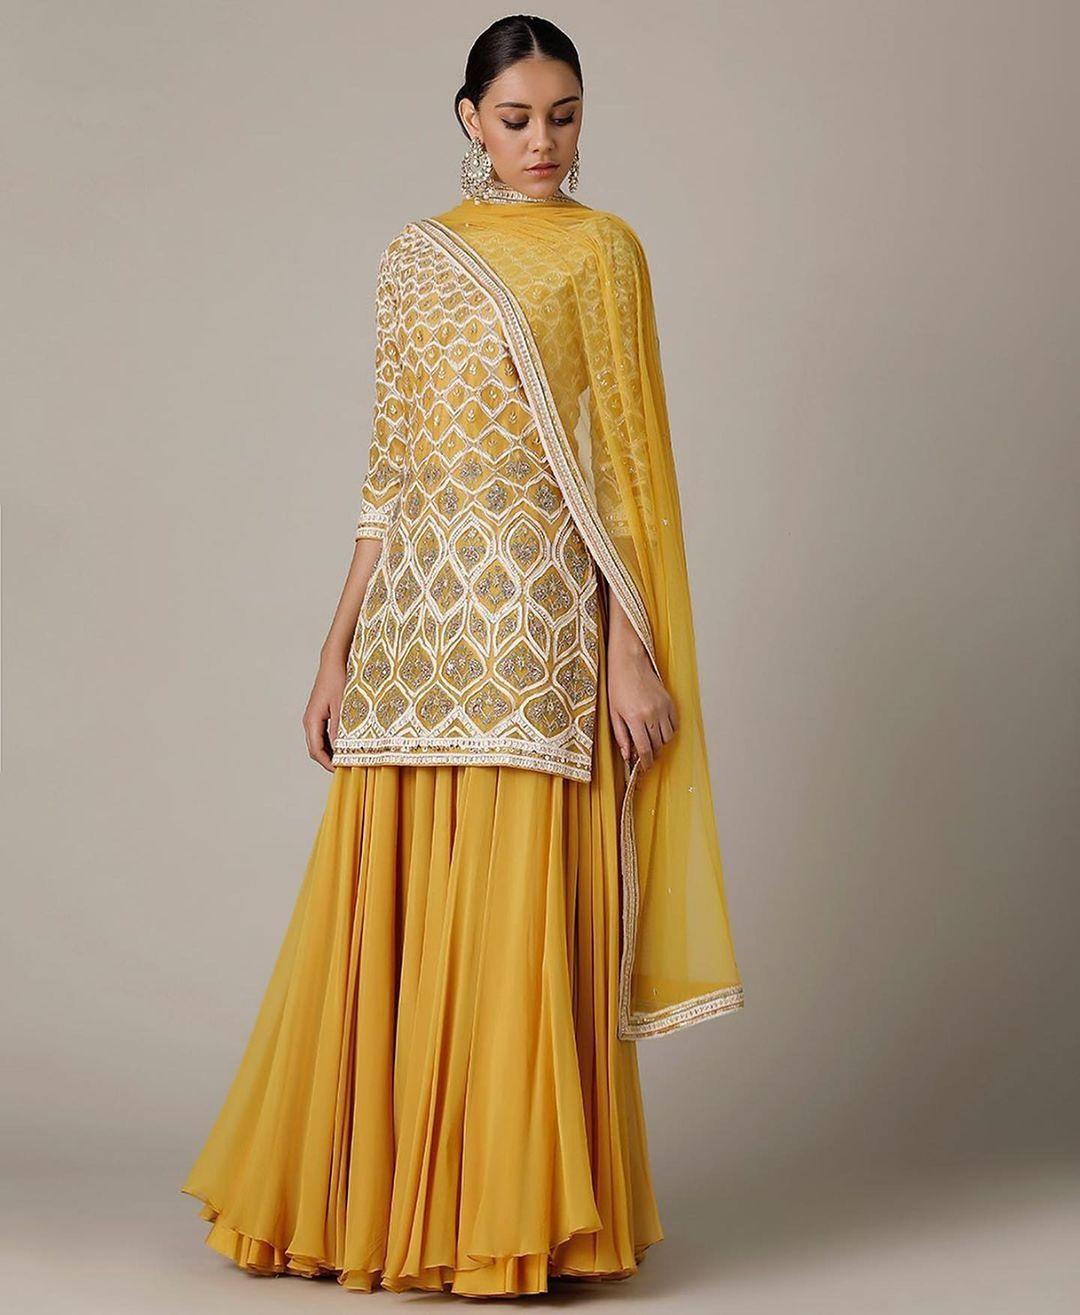 haldi ceremony dress | Dresses Images 2022